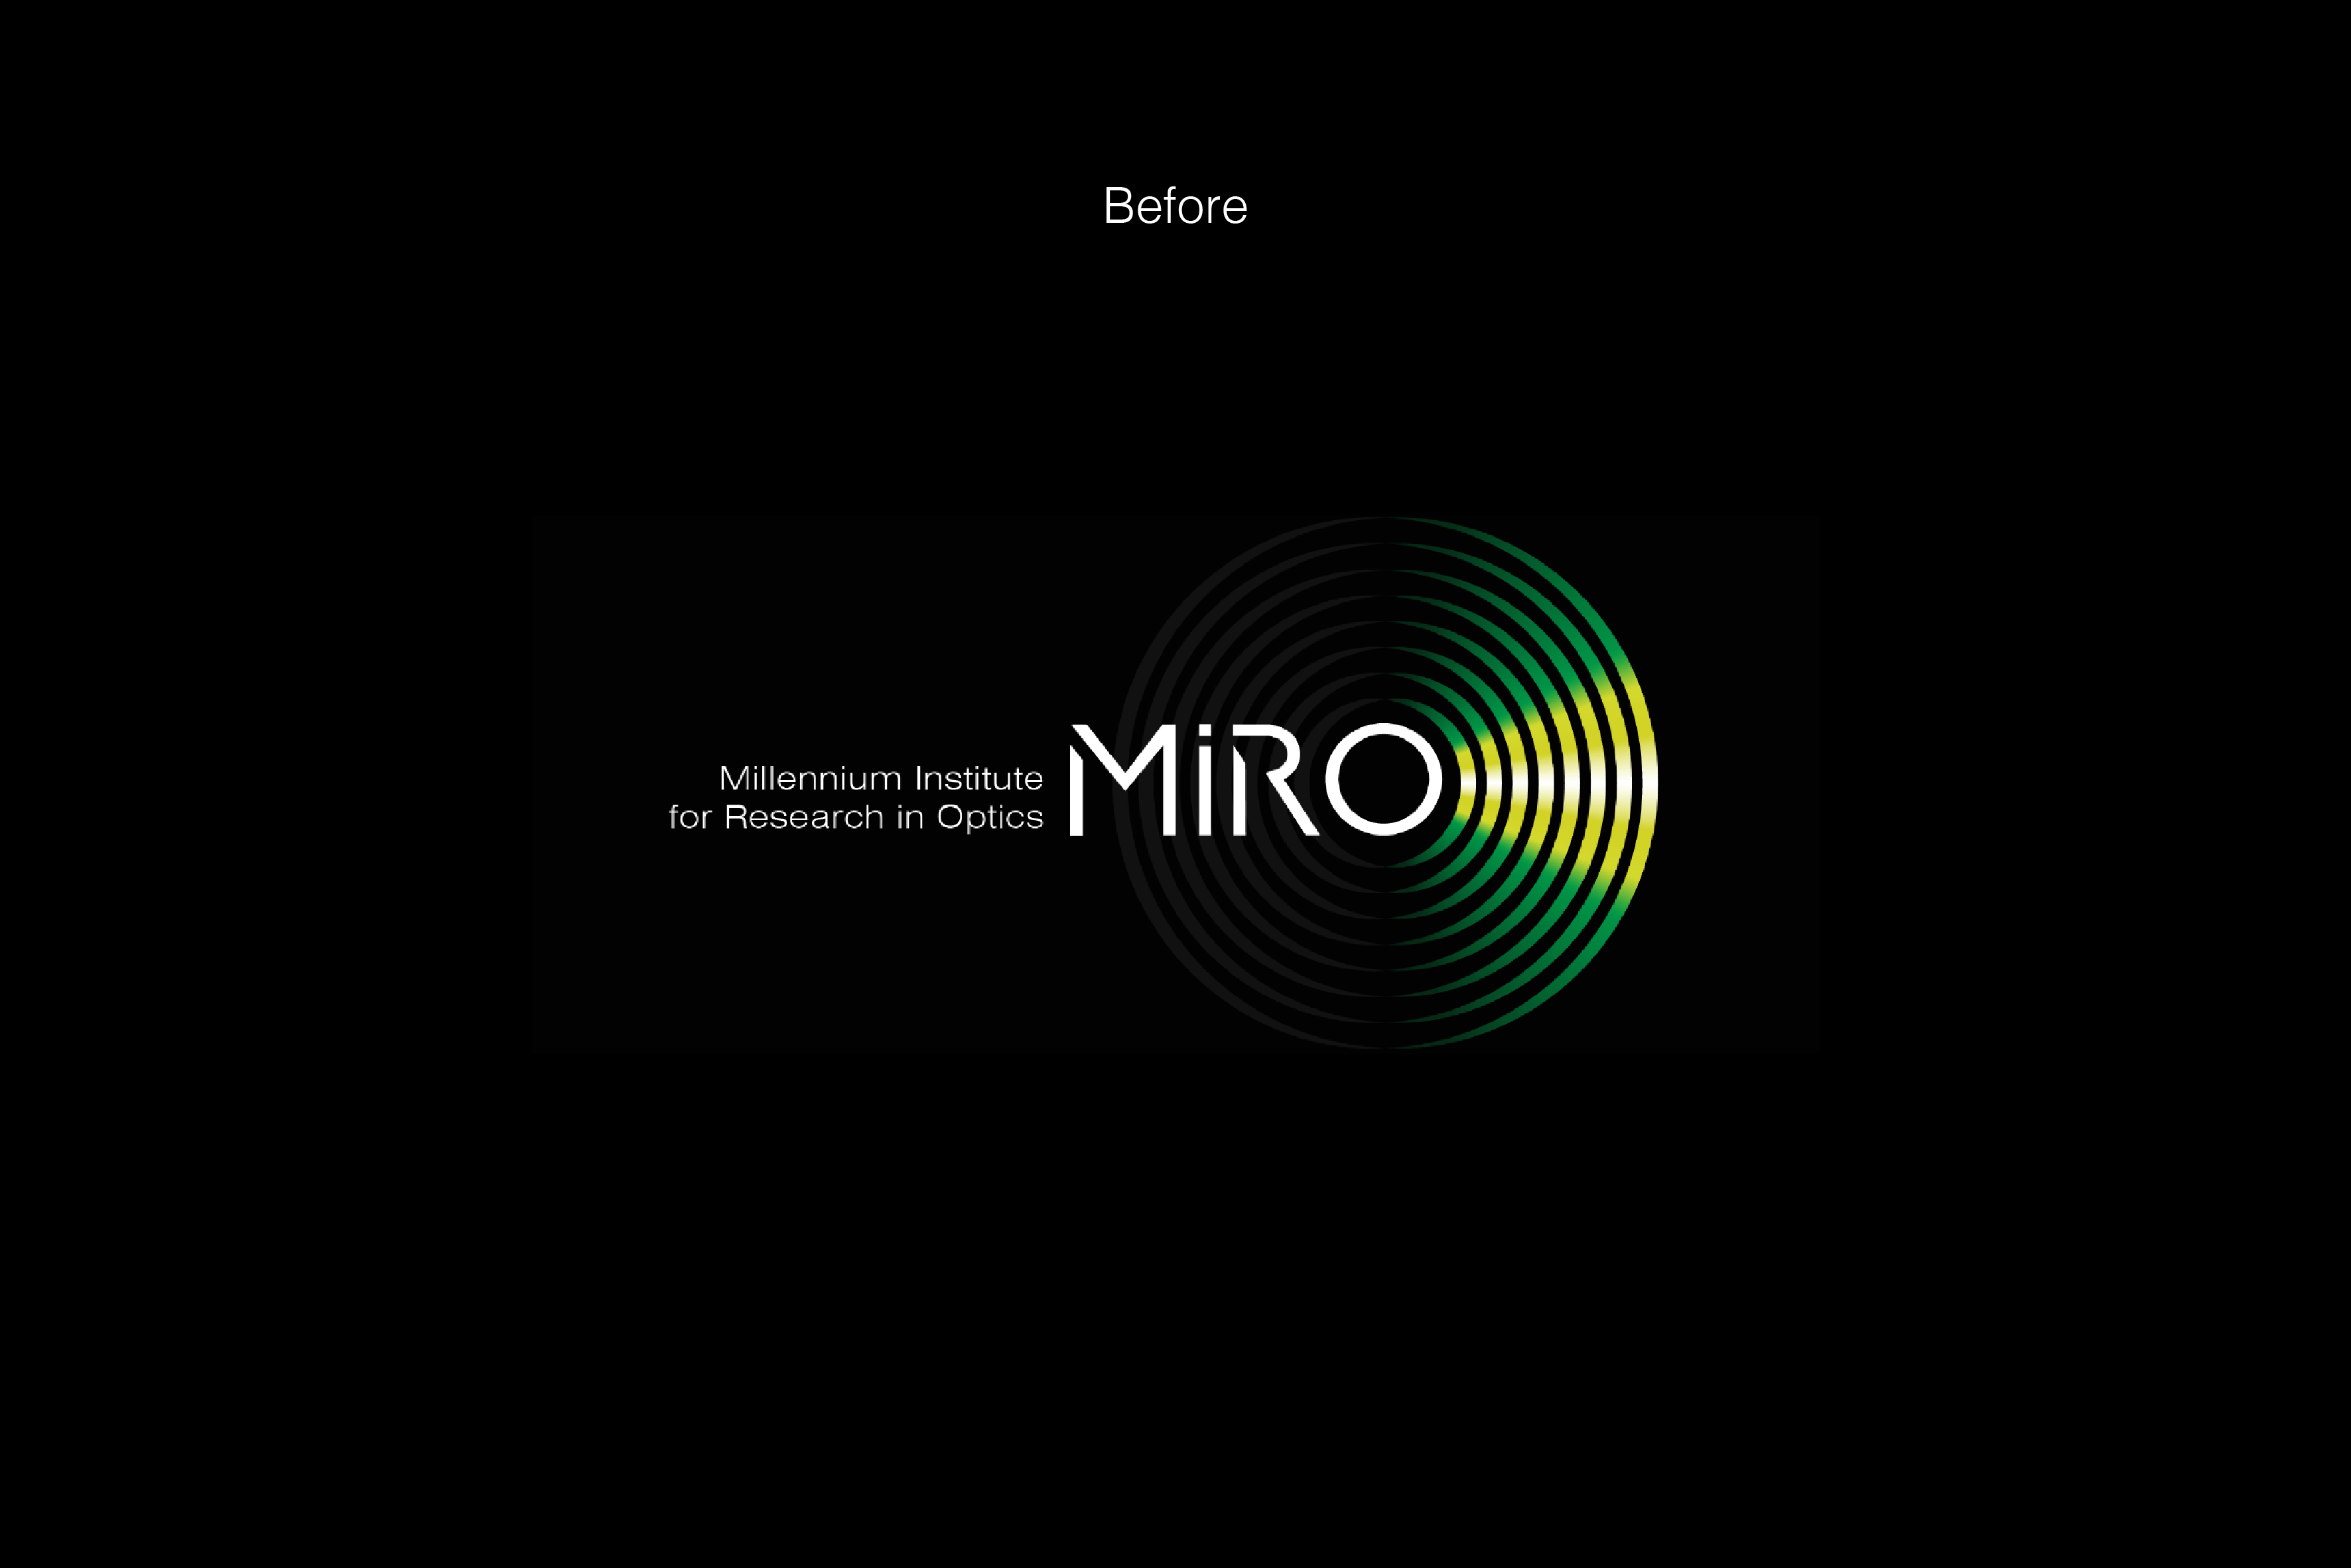 MIRO-logo-Daniel-Cavalcanti-before